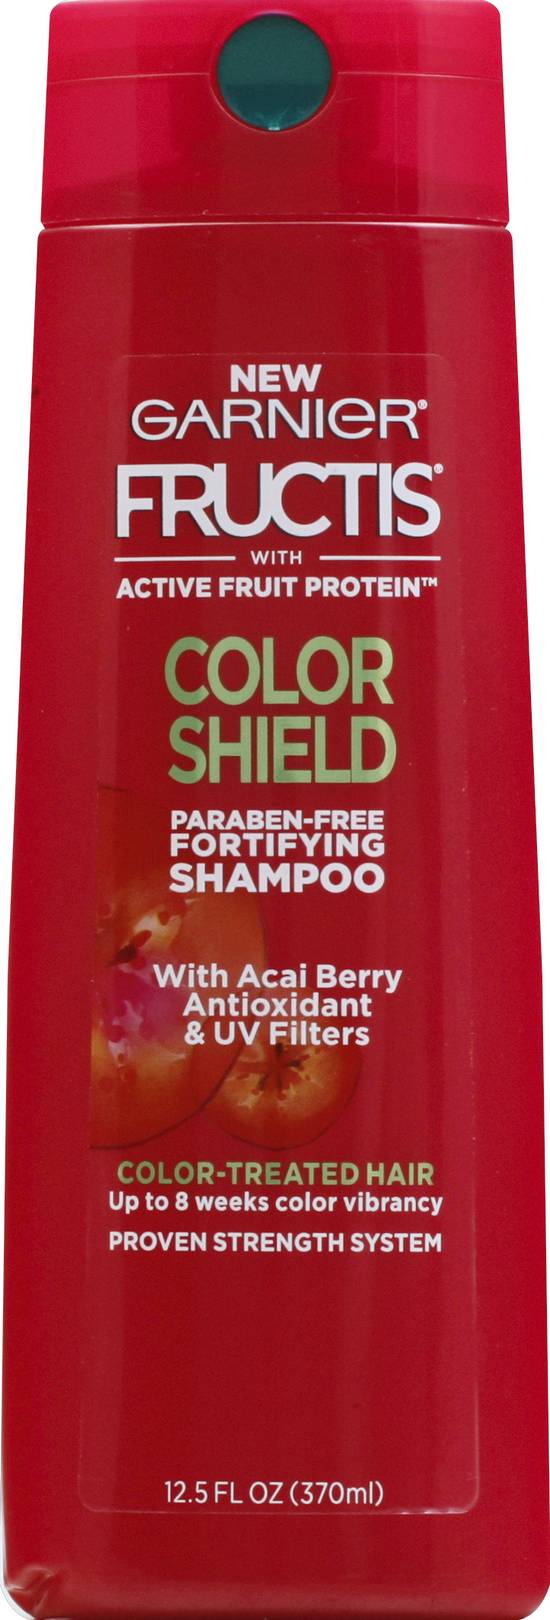 Fructis Color Shield Shampoo